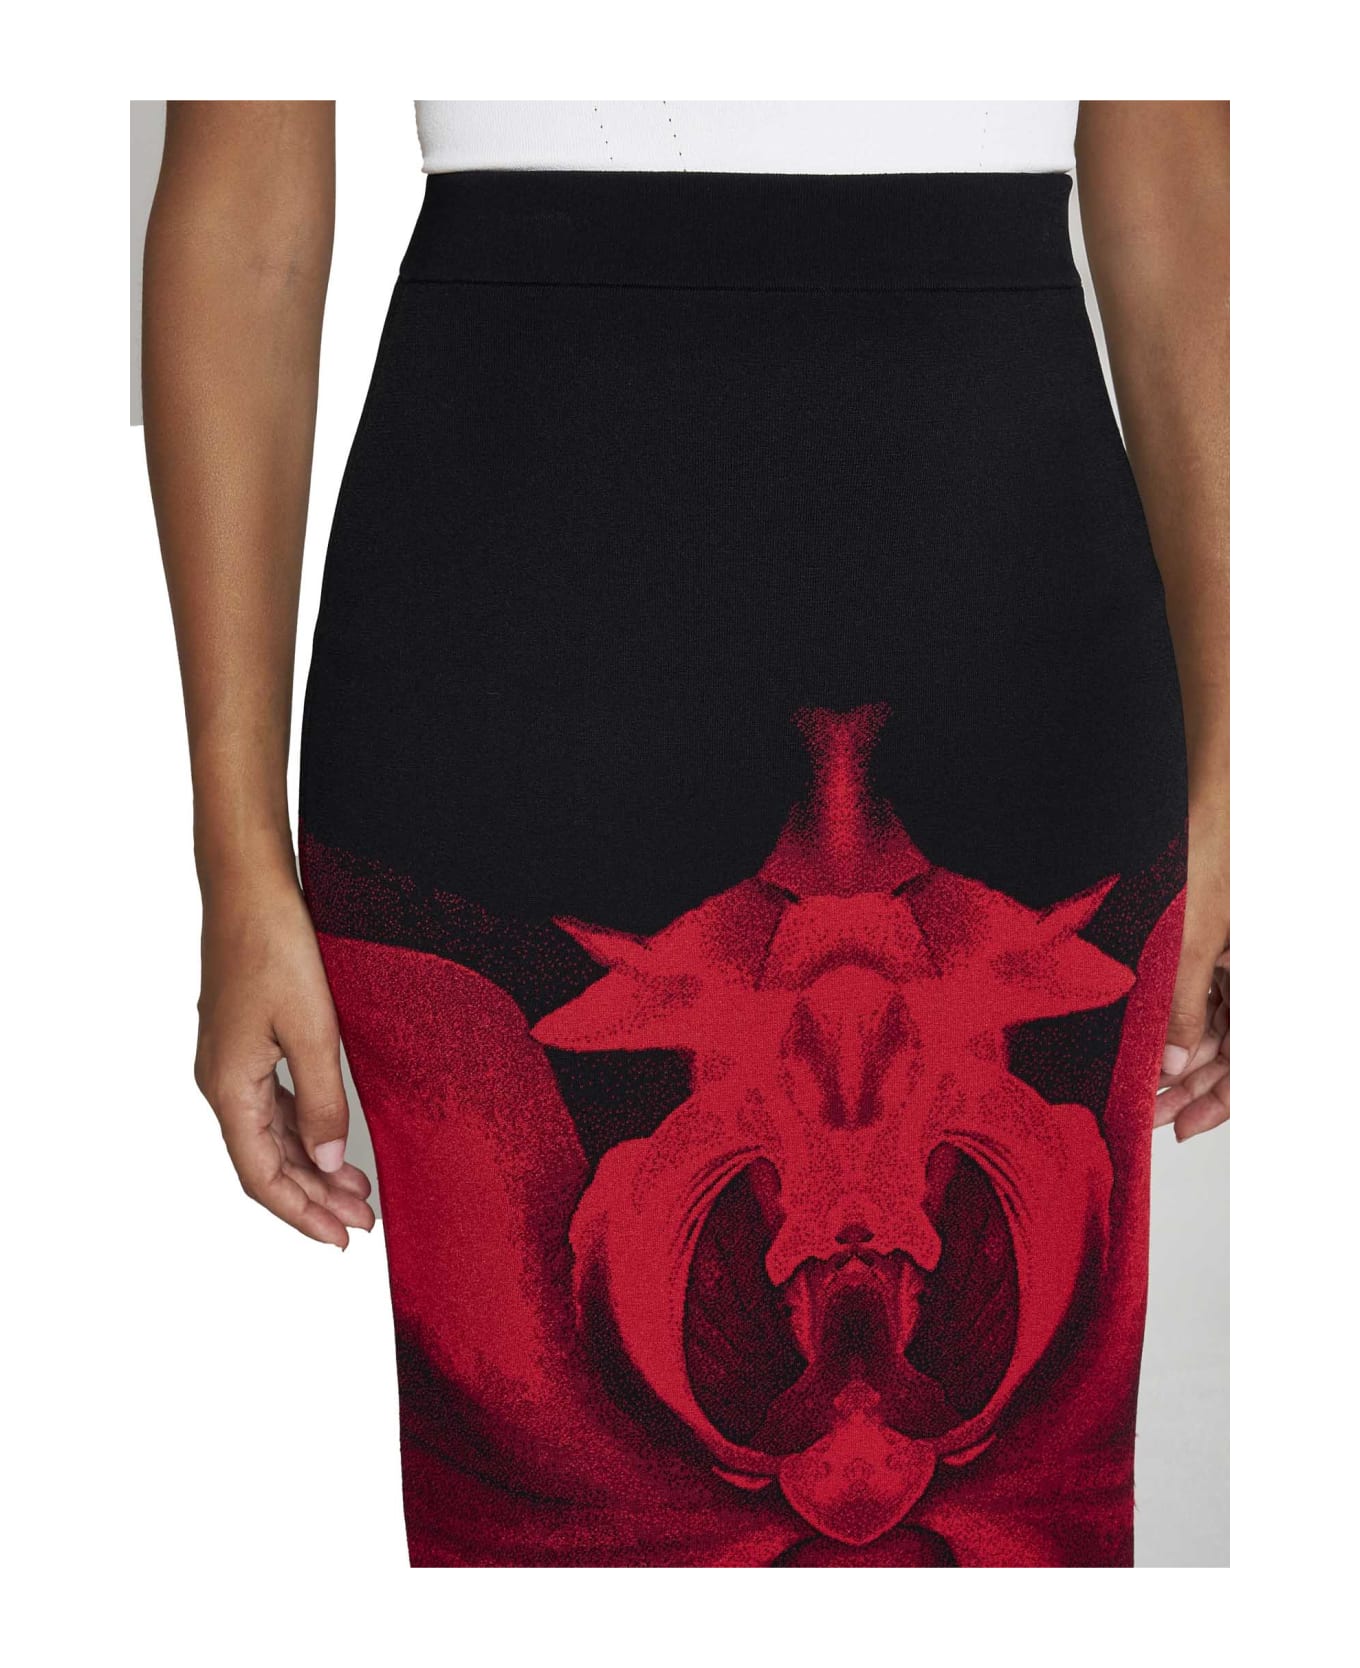 Alexander McQueen Printed Skirt - Black red スカート